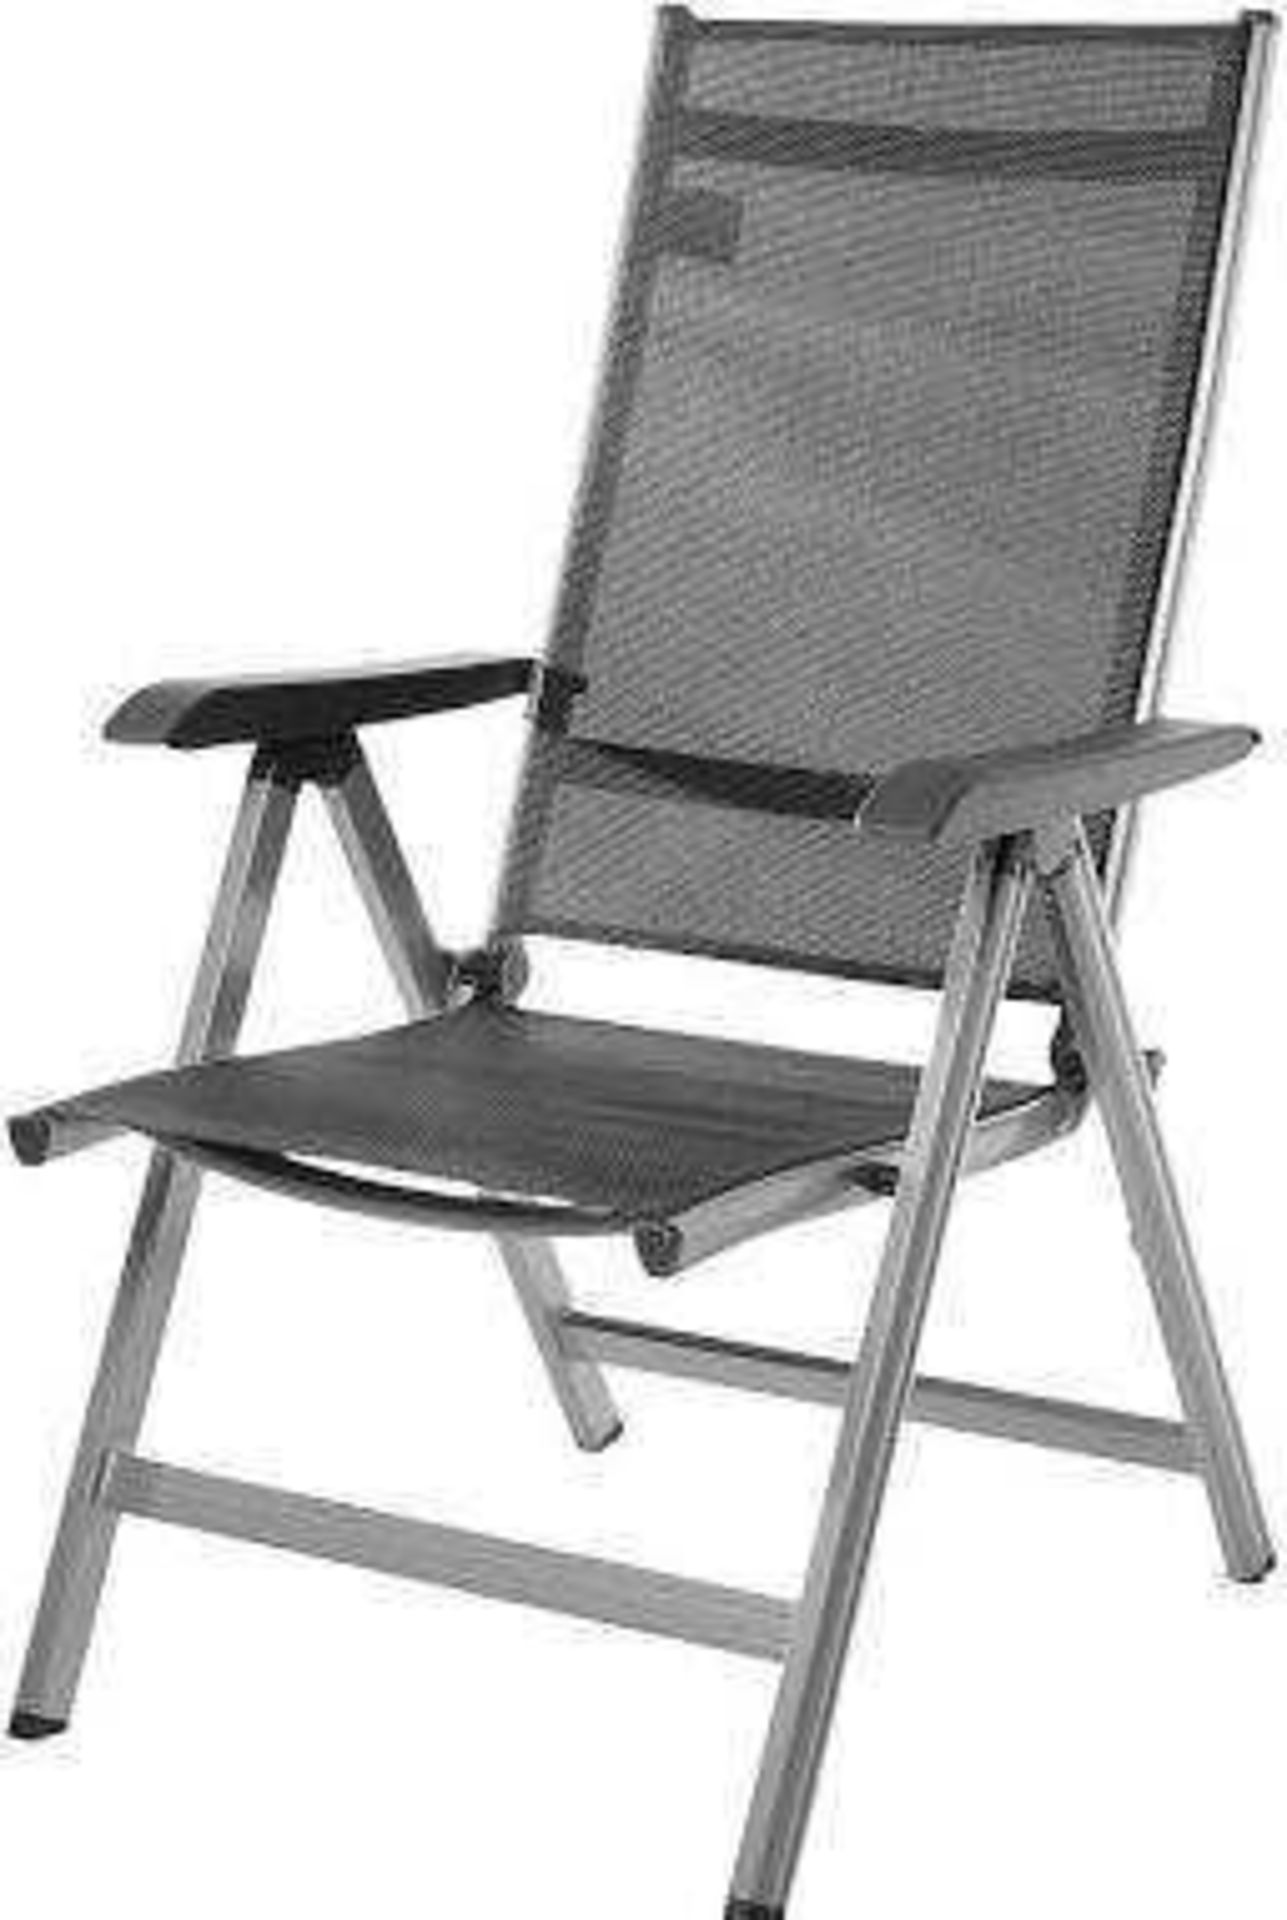 RRP £140 Brand New Amazon Basics Adjustable Chair 2 Piece Set